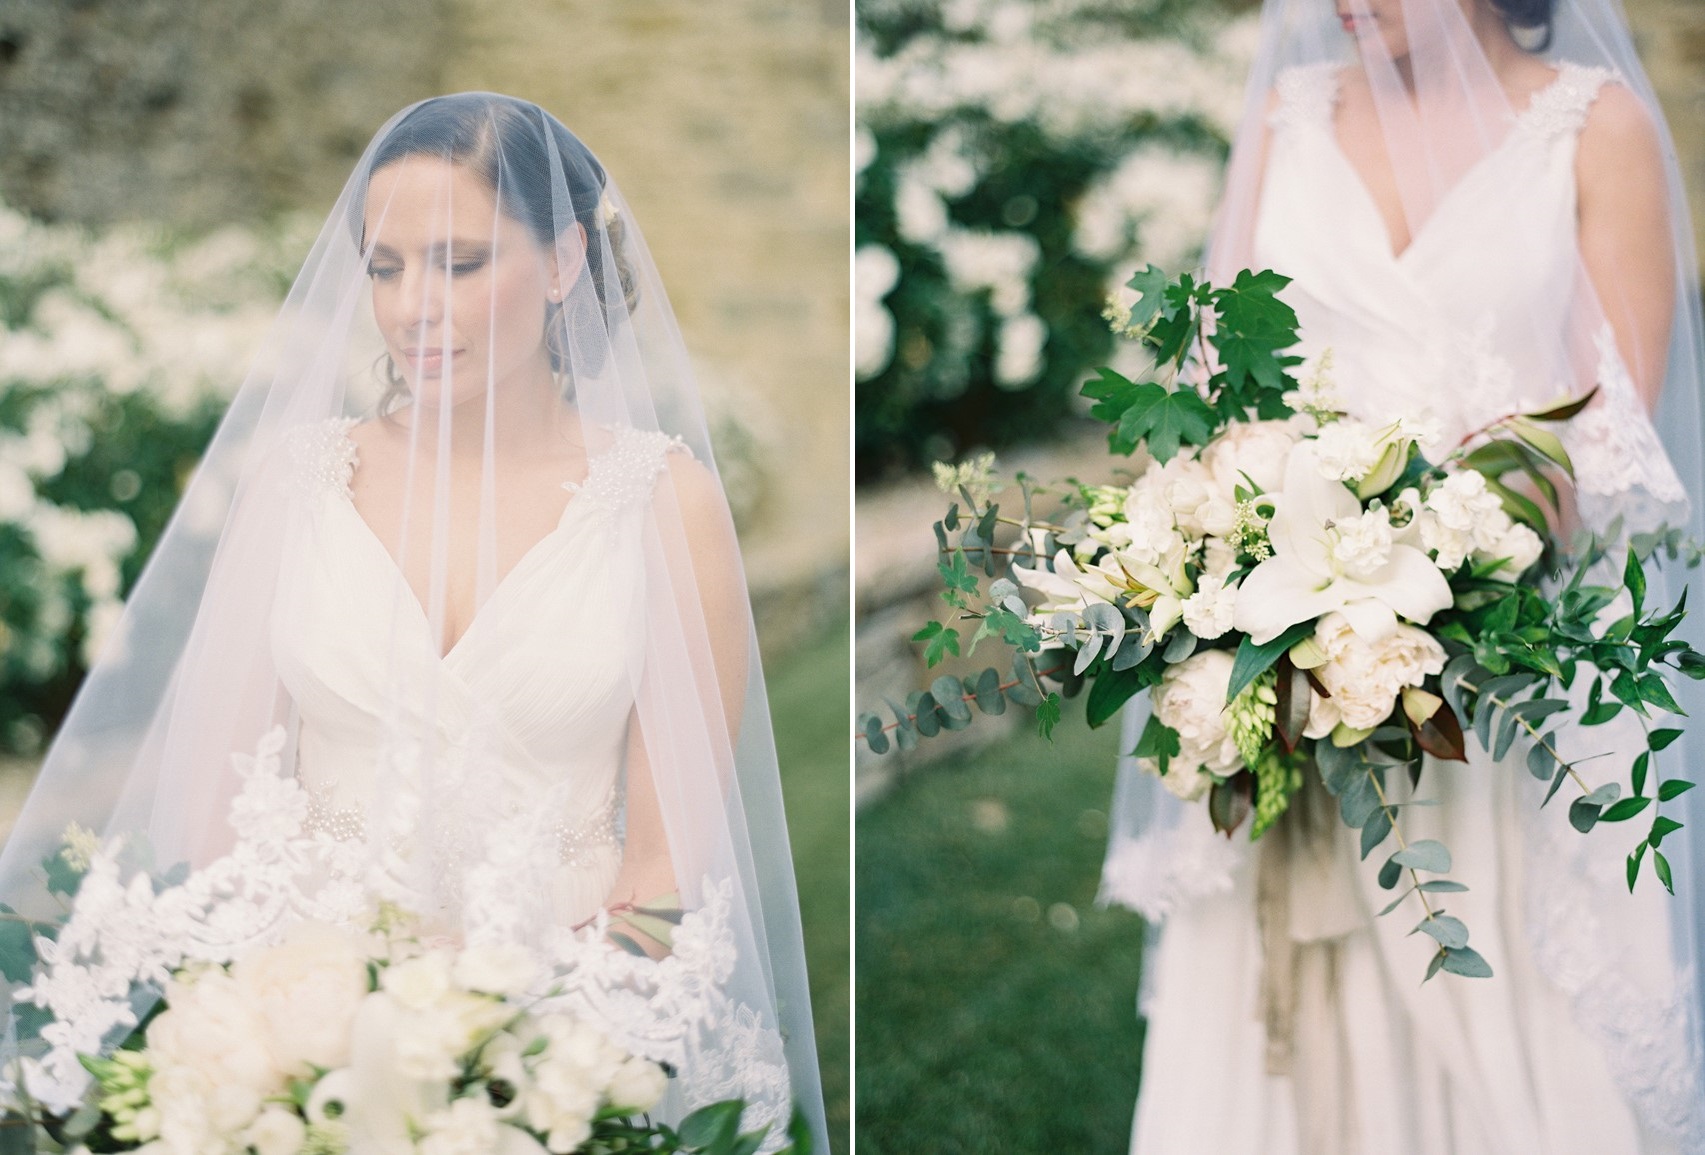 Greenery & White Bridal Bouquet